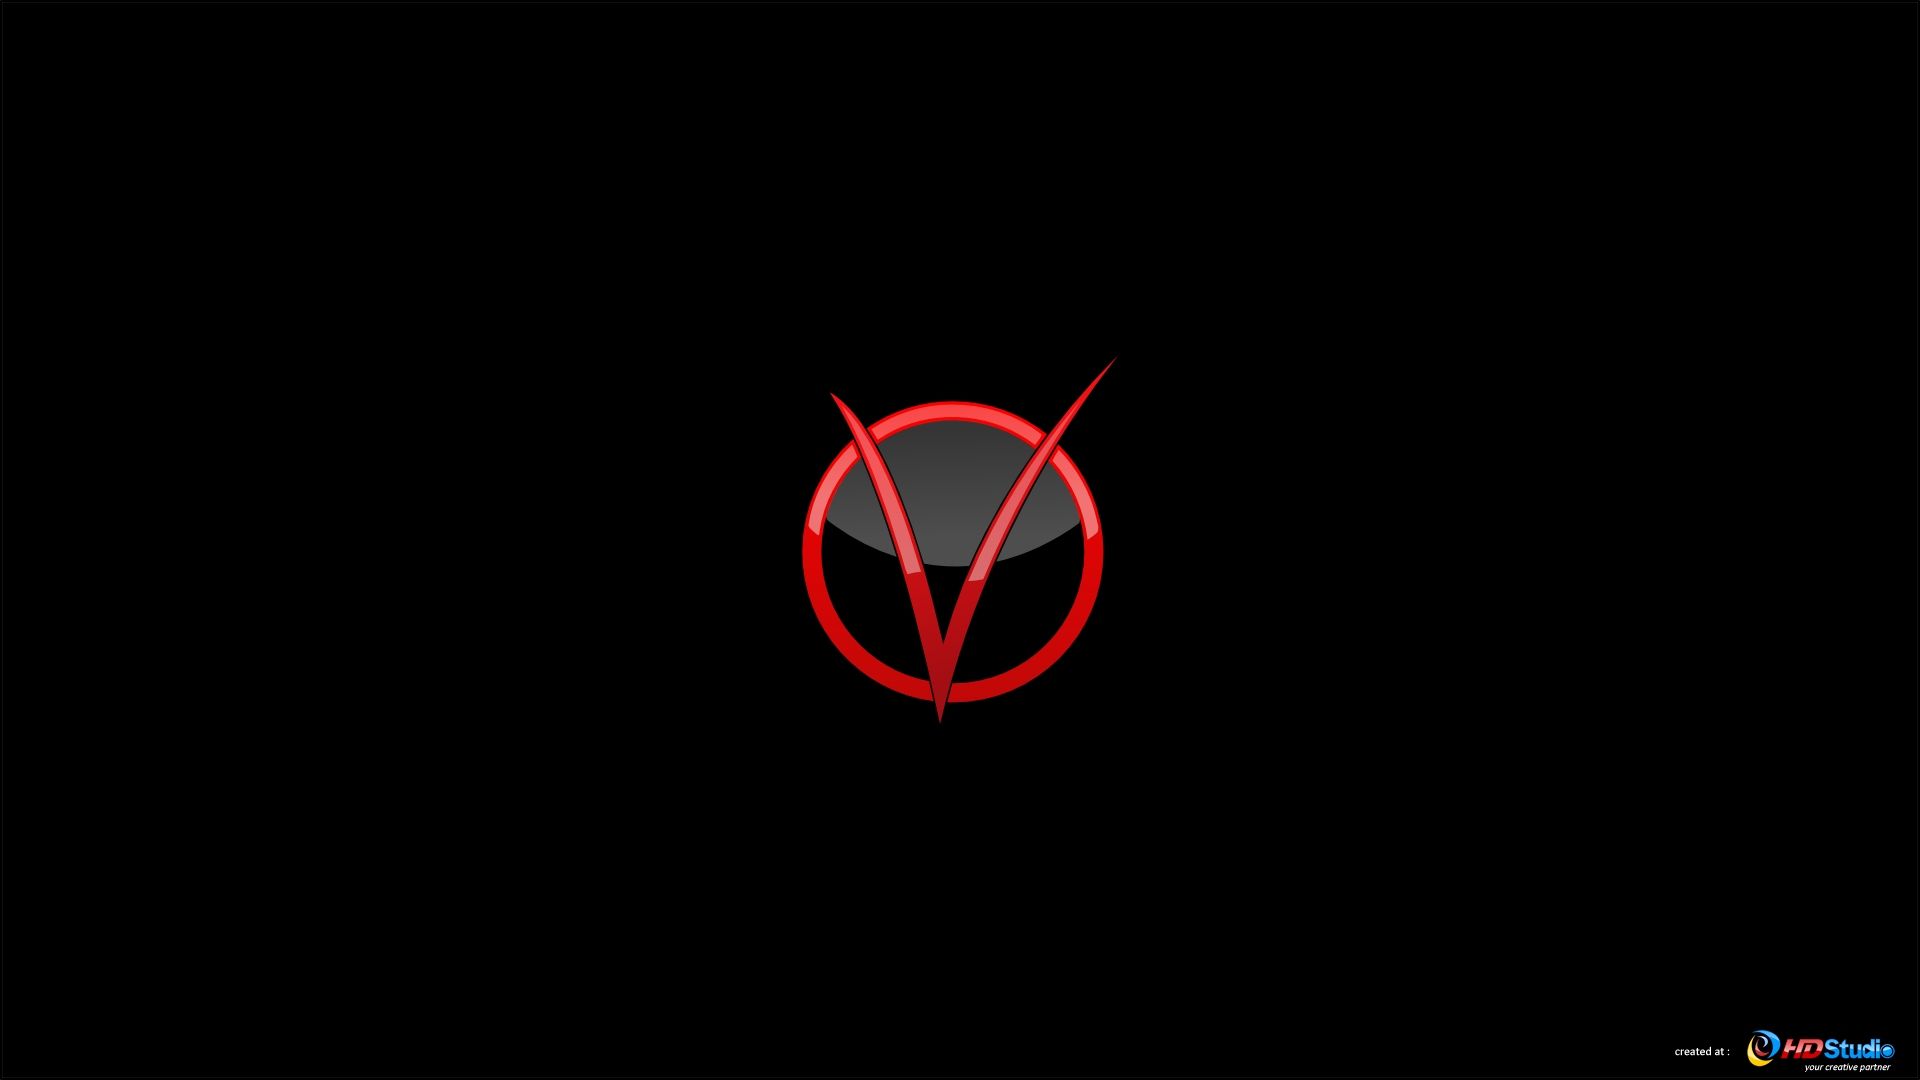 V For Vendetta Wallpapers - Wallpaper Cave